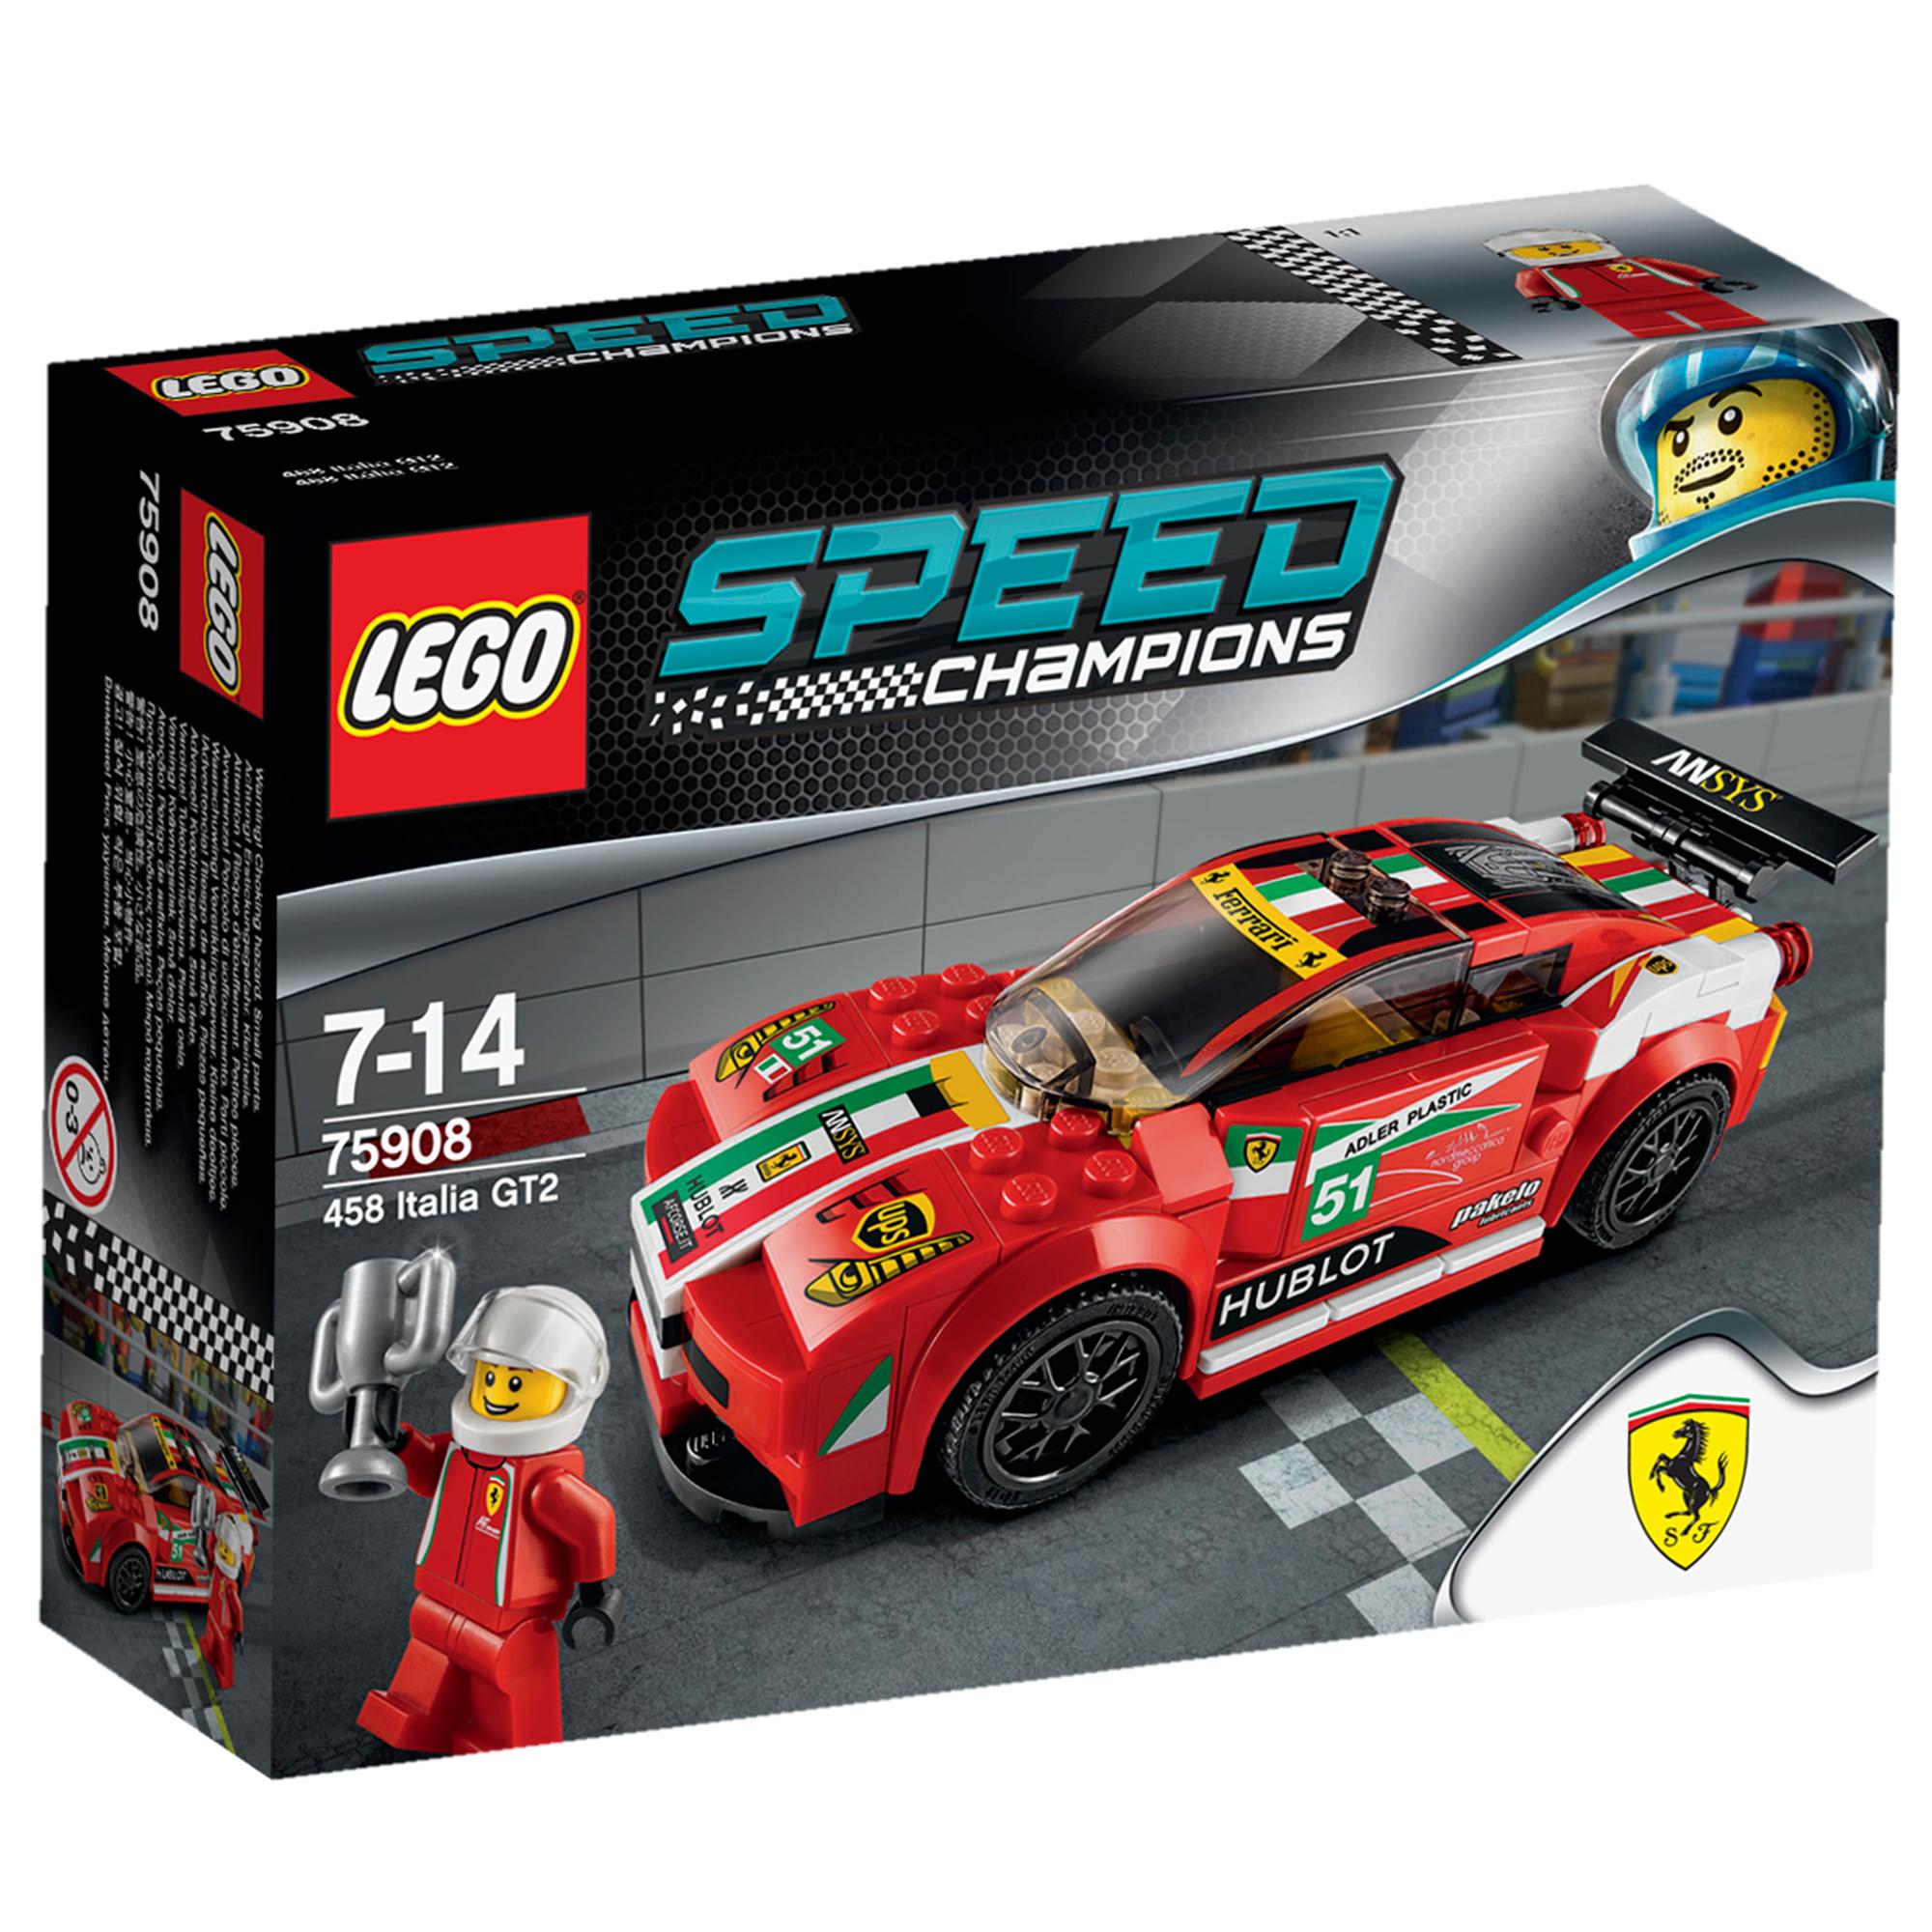 lego-speed-champions-458-italia-gt2-75908-87389-0-1427425904000.jpg